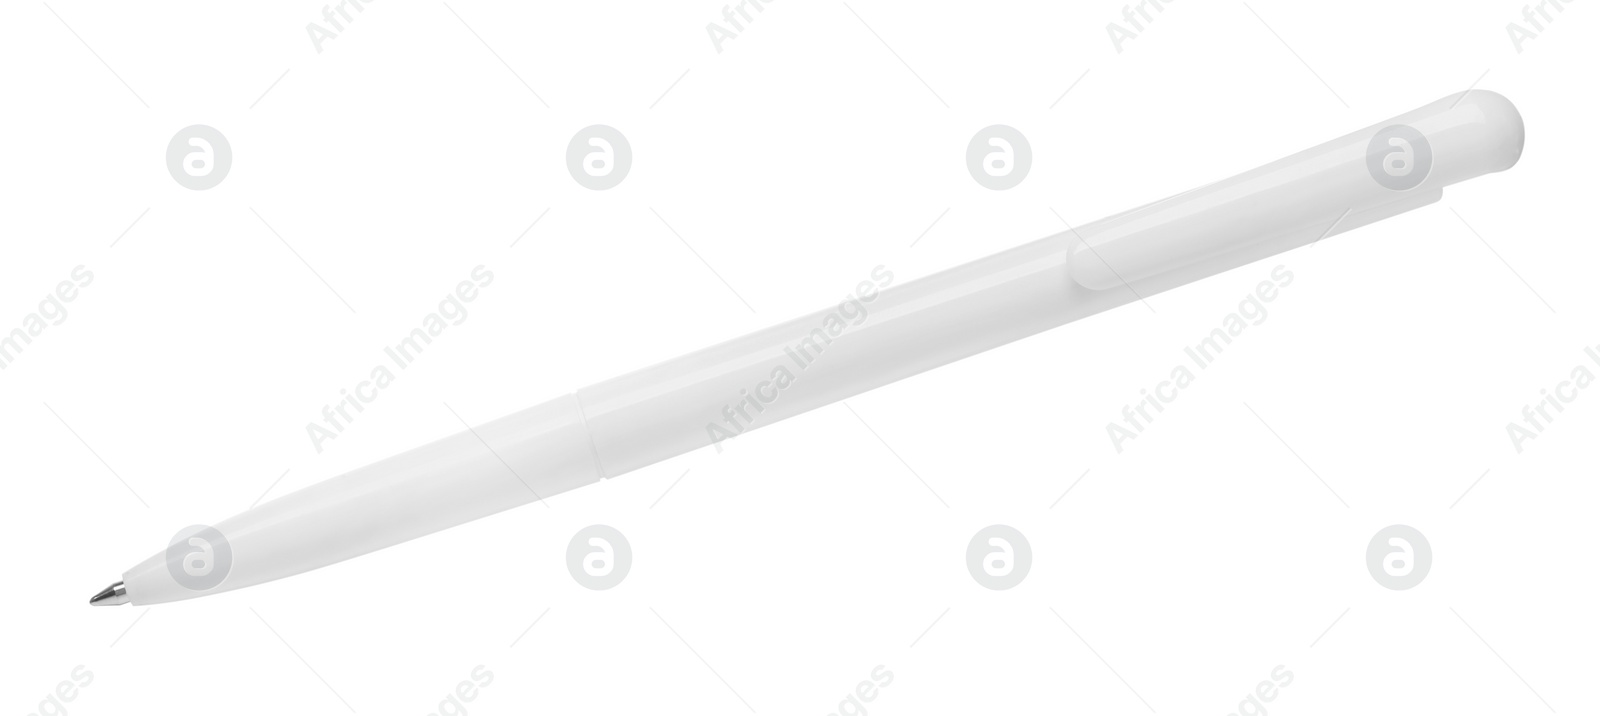 Photo of New stylish ballpoint pen isolated on white